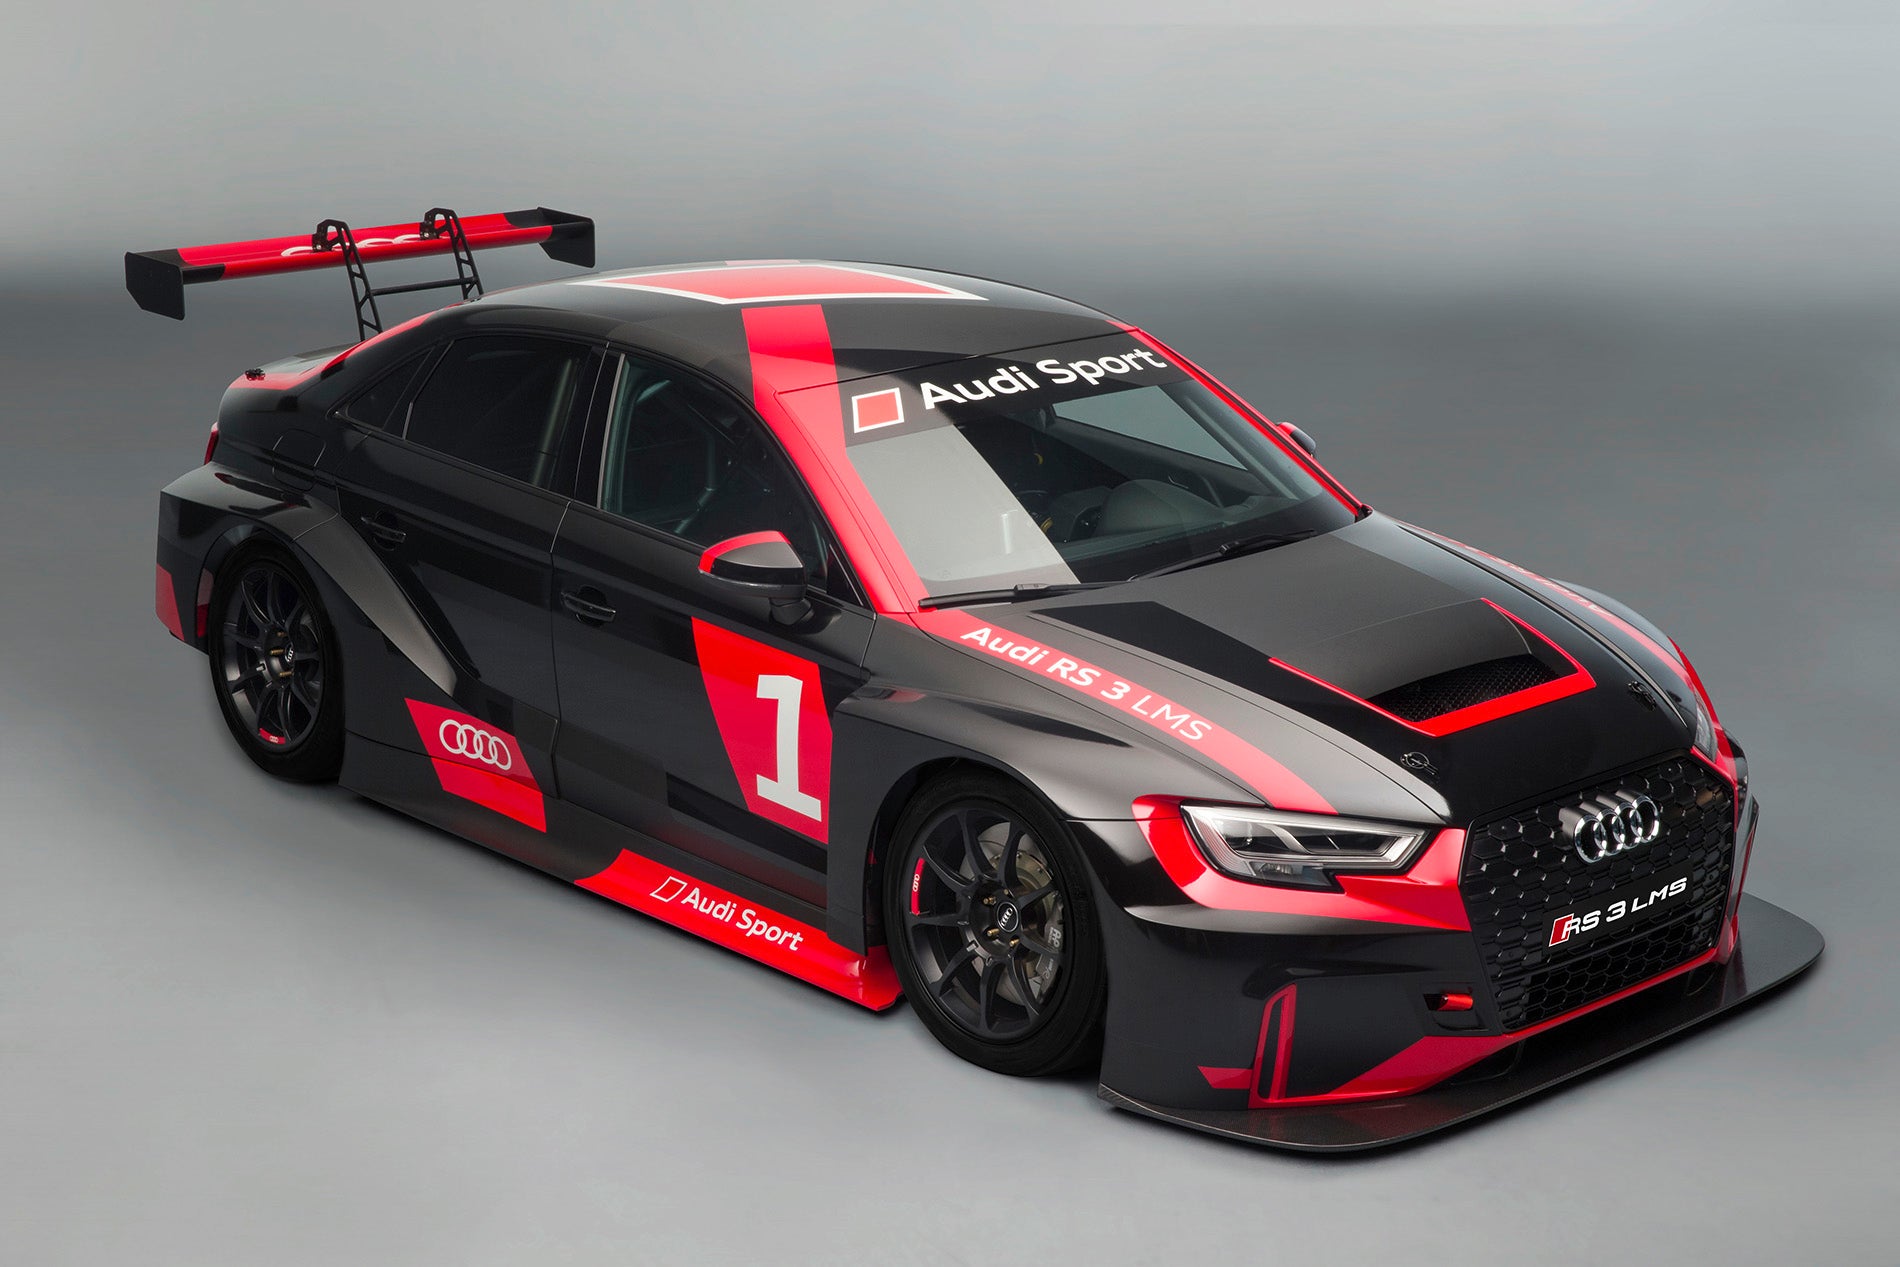 Audi Sport develops racing version of the Audi RS 3 - QuattroWorld